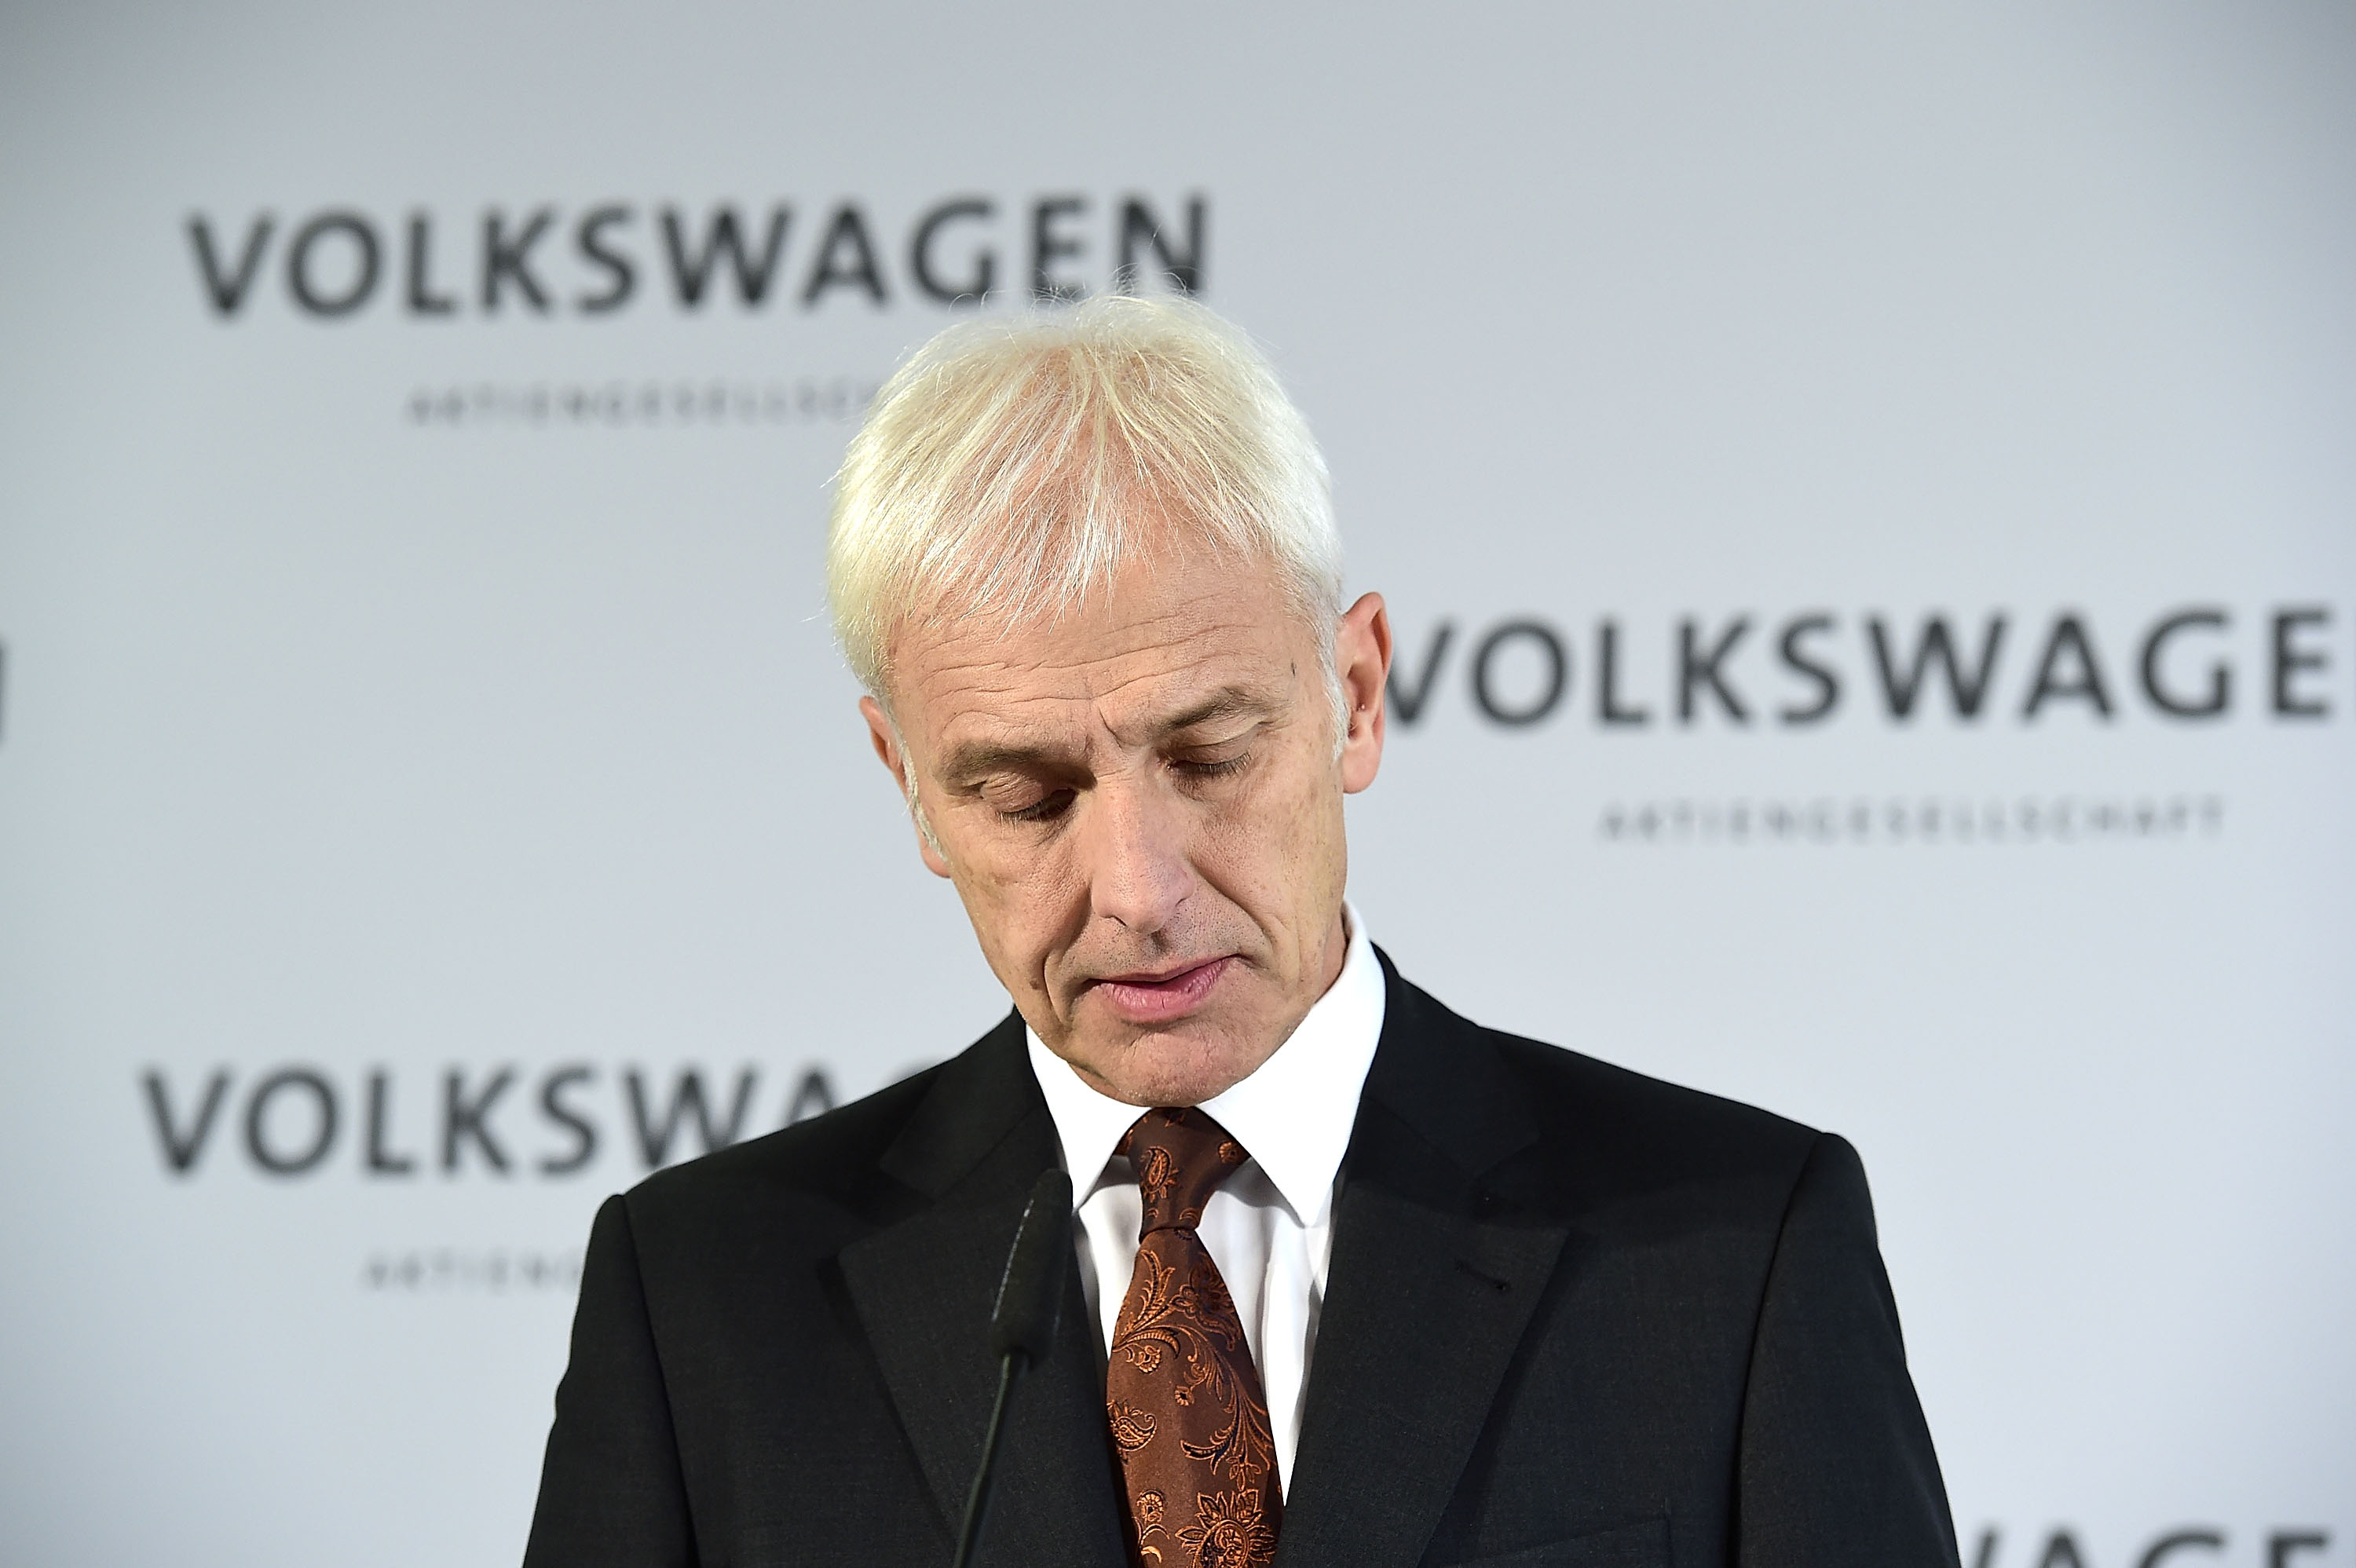 Matthias Mueller, CEO of Volkswagen Group, speaks to the media following a meeting of high-ranking Volkswagen managers on November 20, 2015 in Wolfsburg, Germany. (Alexander Koerner&mdash;Getty Images)